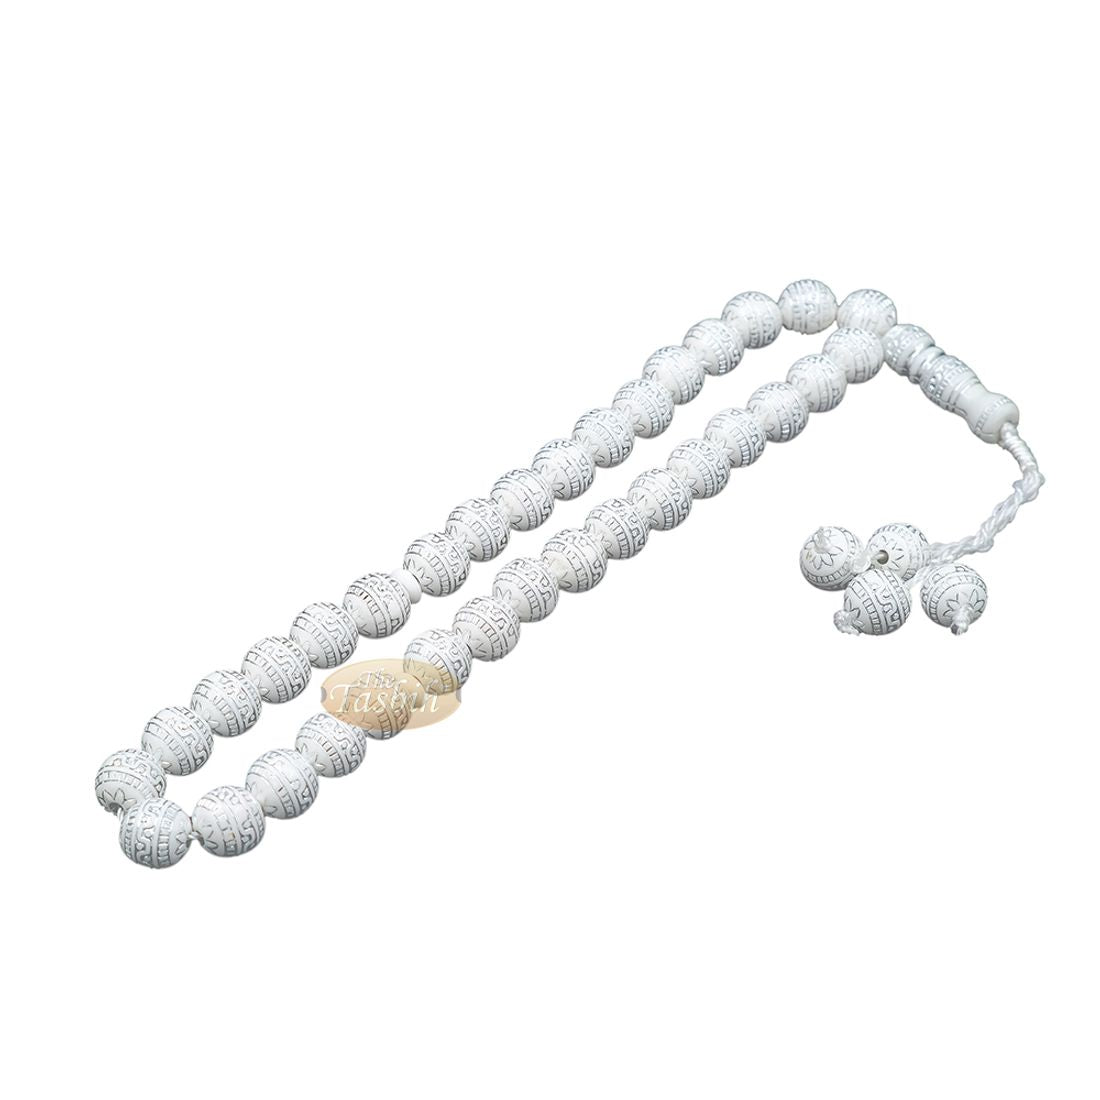 Large Sibha 13-mm White & Metallic Silver Meandros Design Plastic Resin 33-bead Muslim Tasbih Prayer Beads